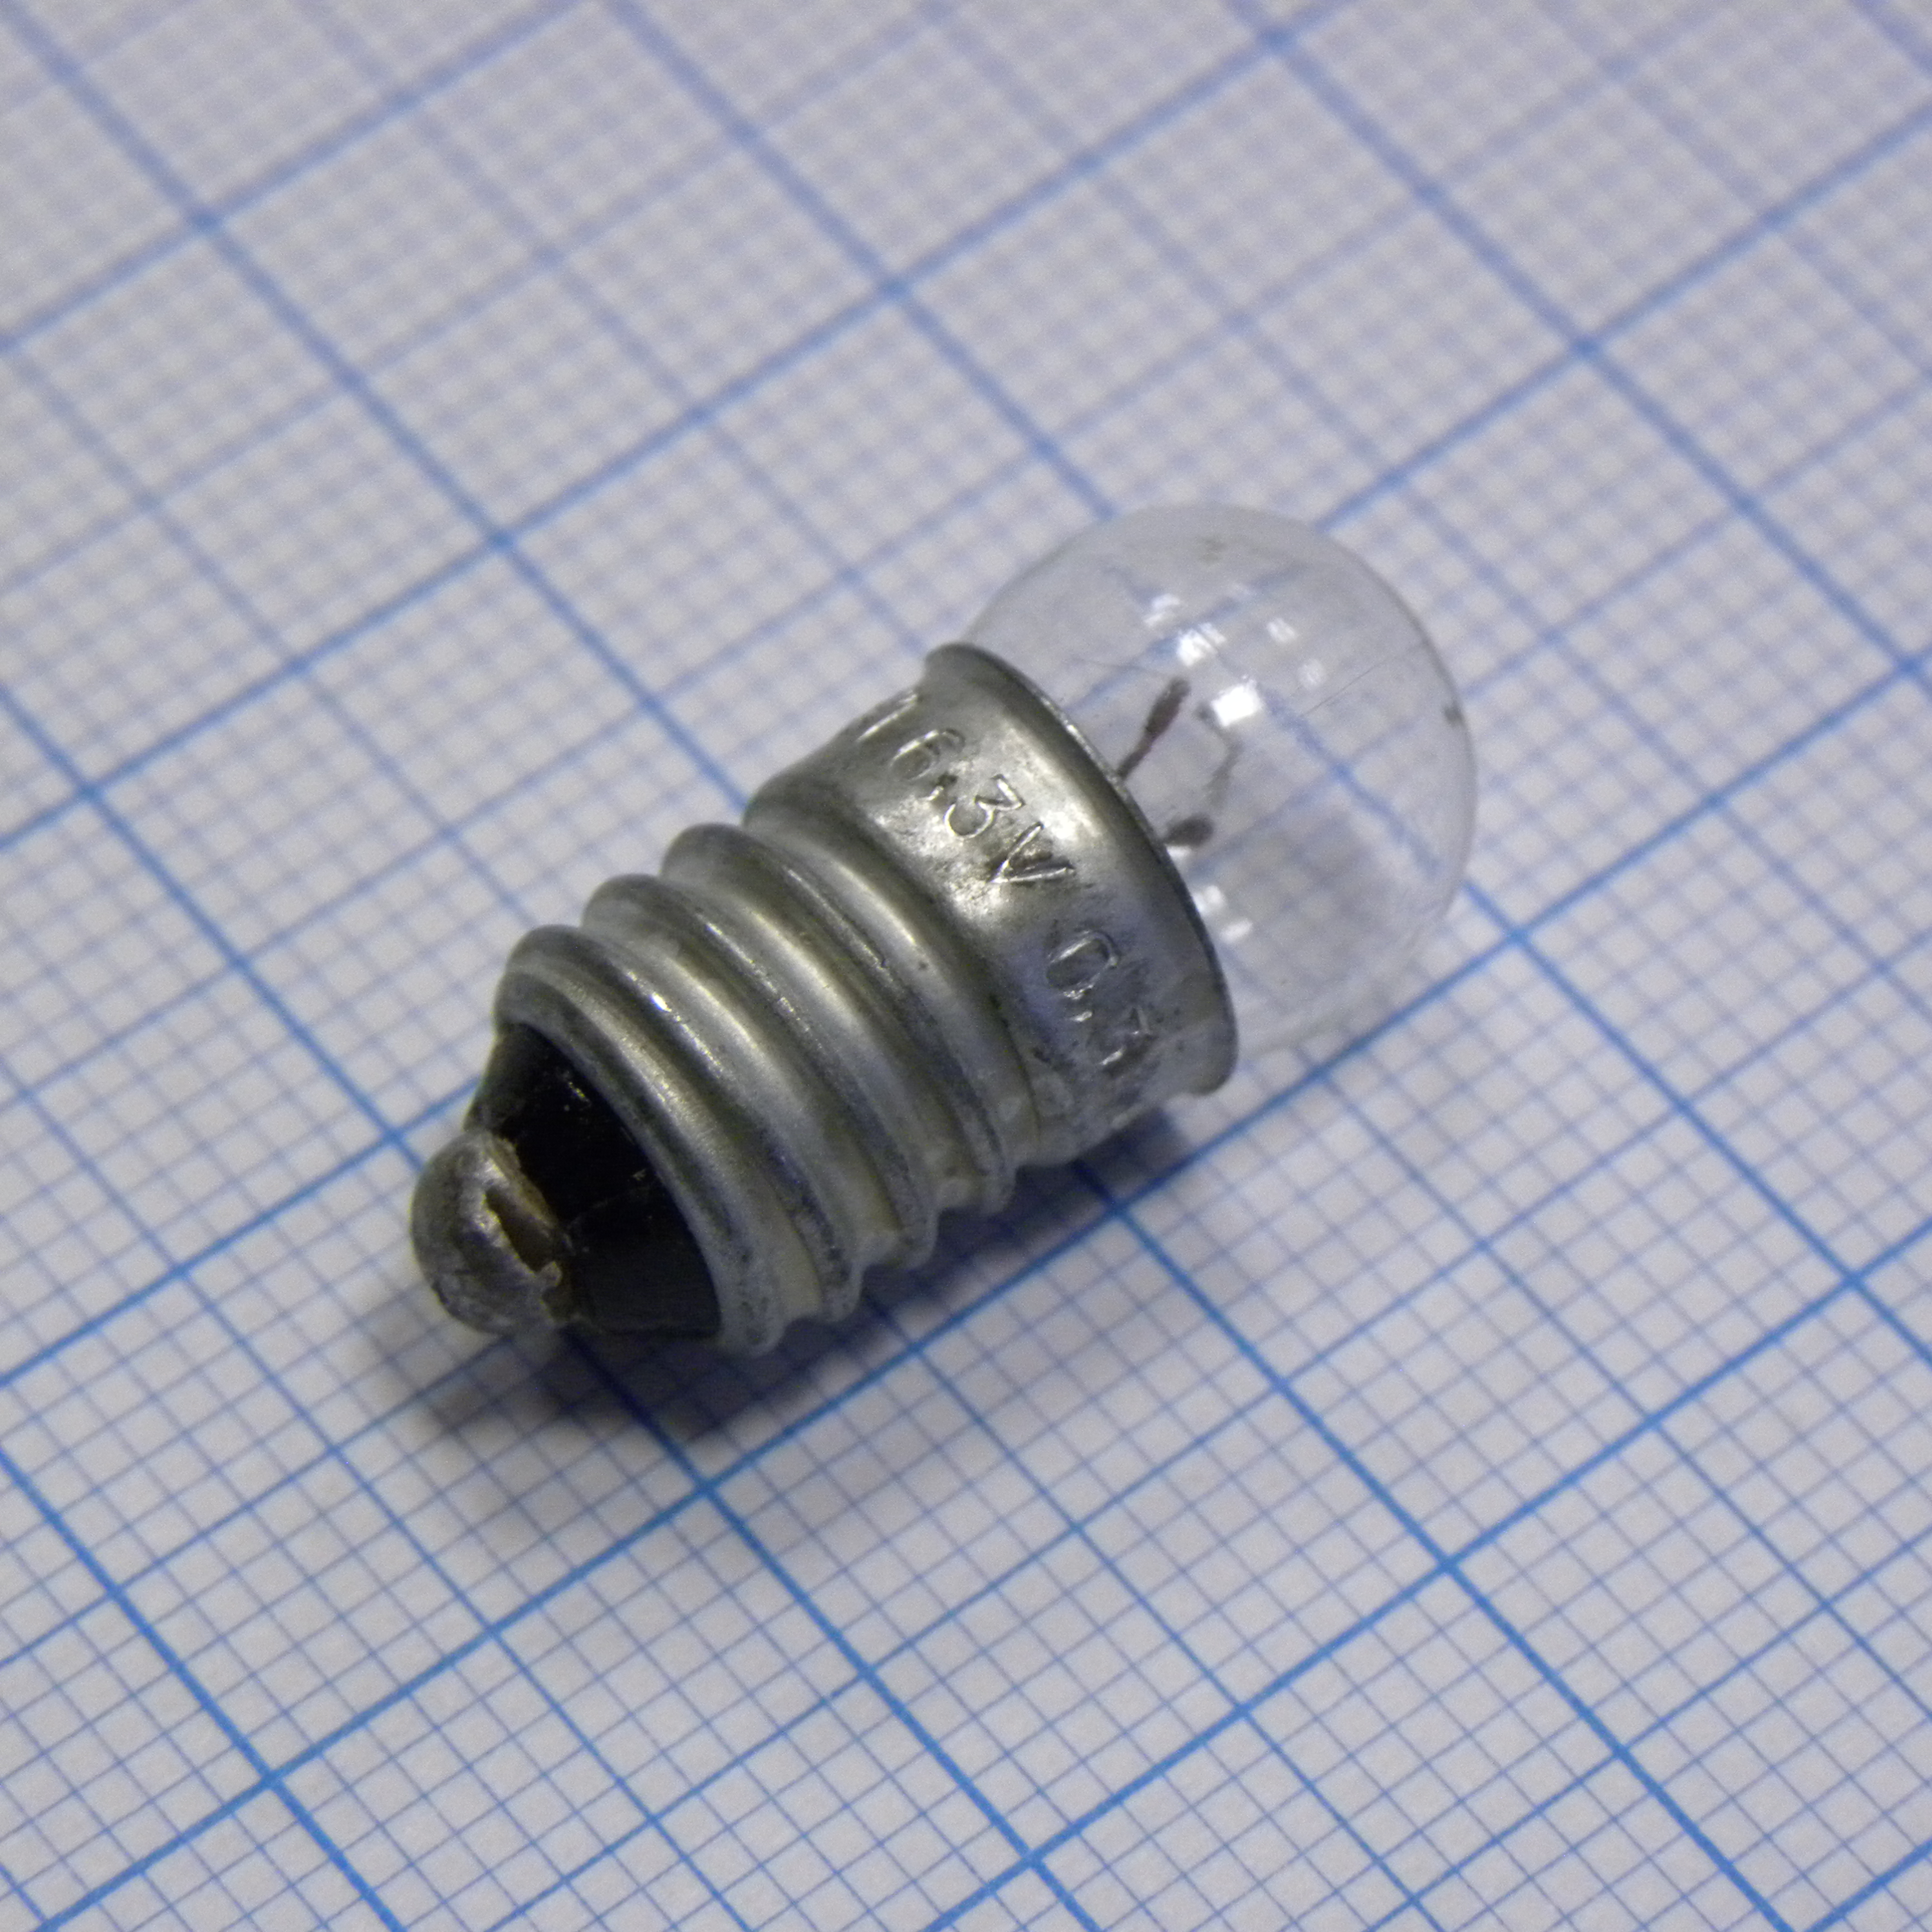 Лампочка 2 5 вольта. Мн6.3-0.3, лампа накаливания (6.3в, 0.3а), цоколь е10/13. Лампа накаливания мн 6,3-0,3 е10. Лампа накаливания (6.3в, 0.3а), цоколь е10/13 аналог светодиодная. Лампа накаливания мн лампа накаливания (6.3в, 0.3а), цоколь е10/13.